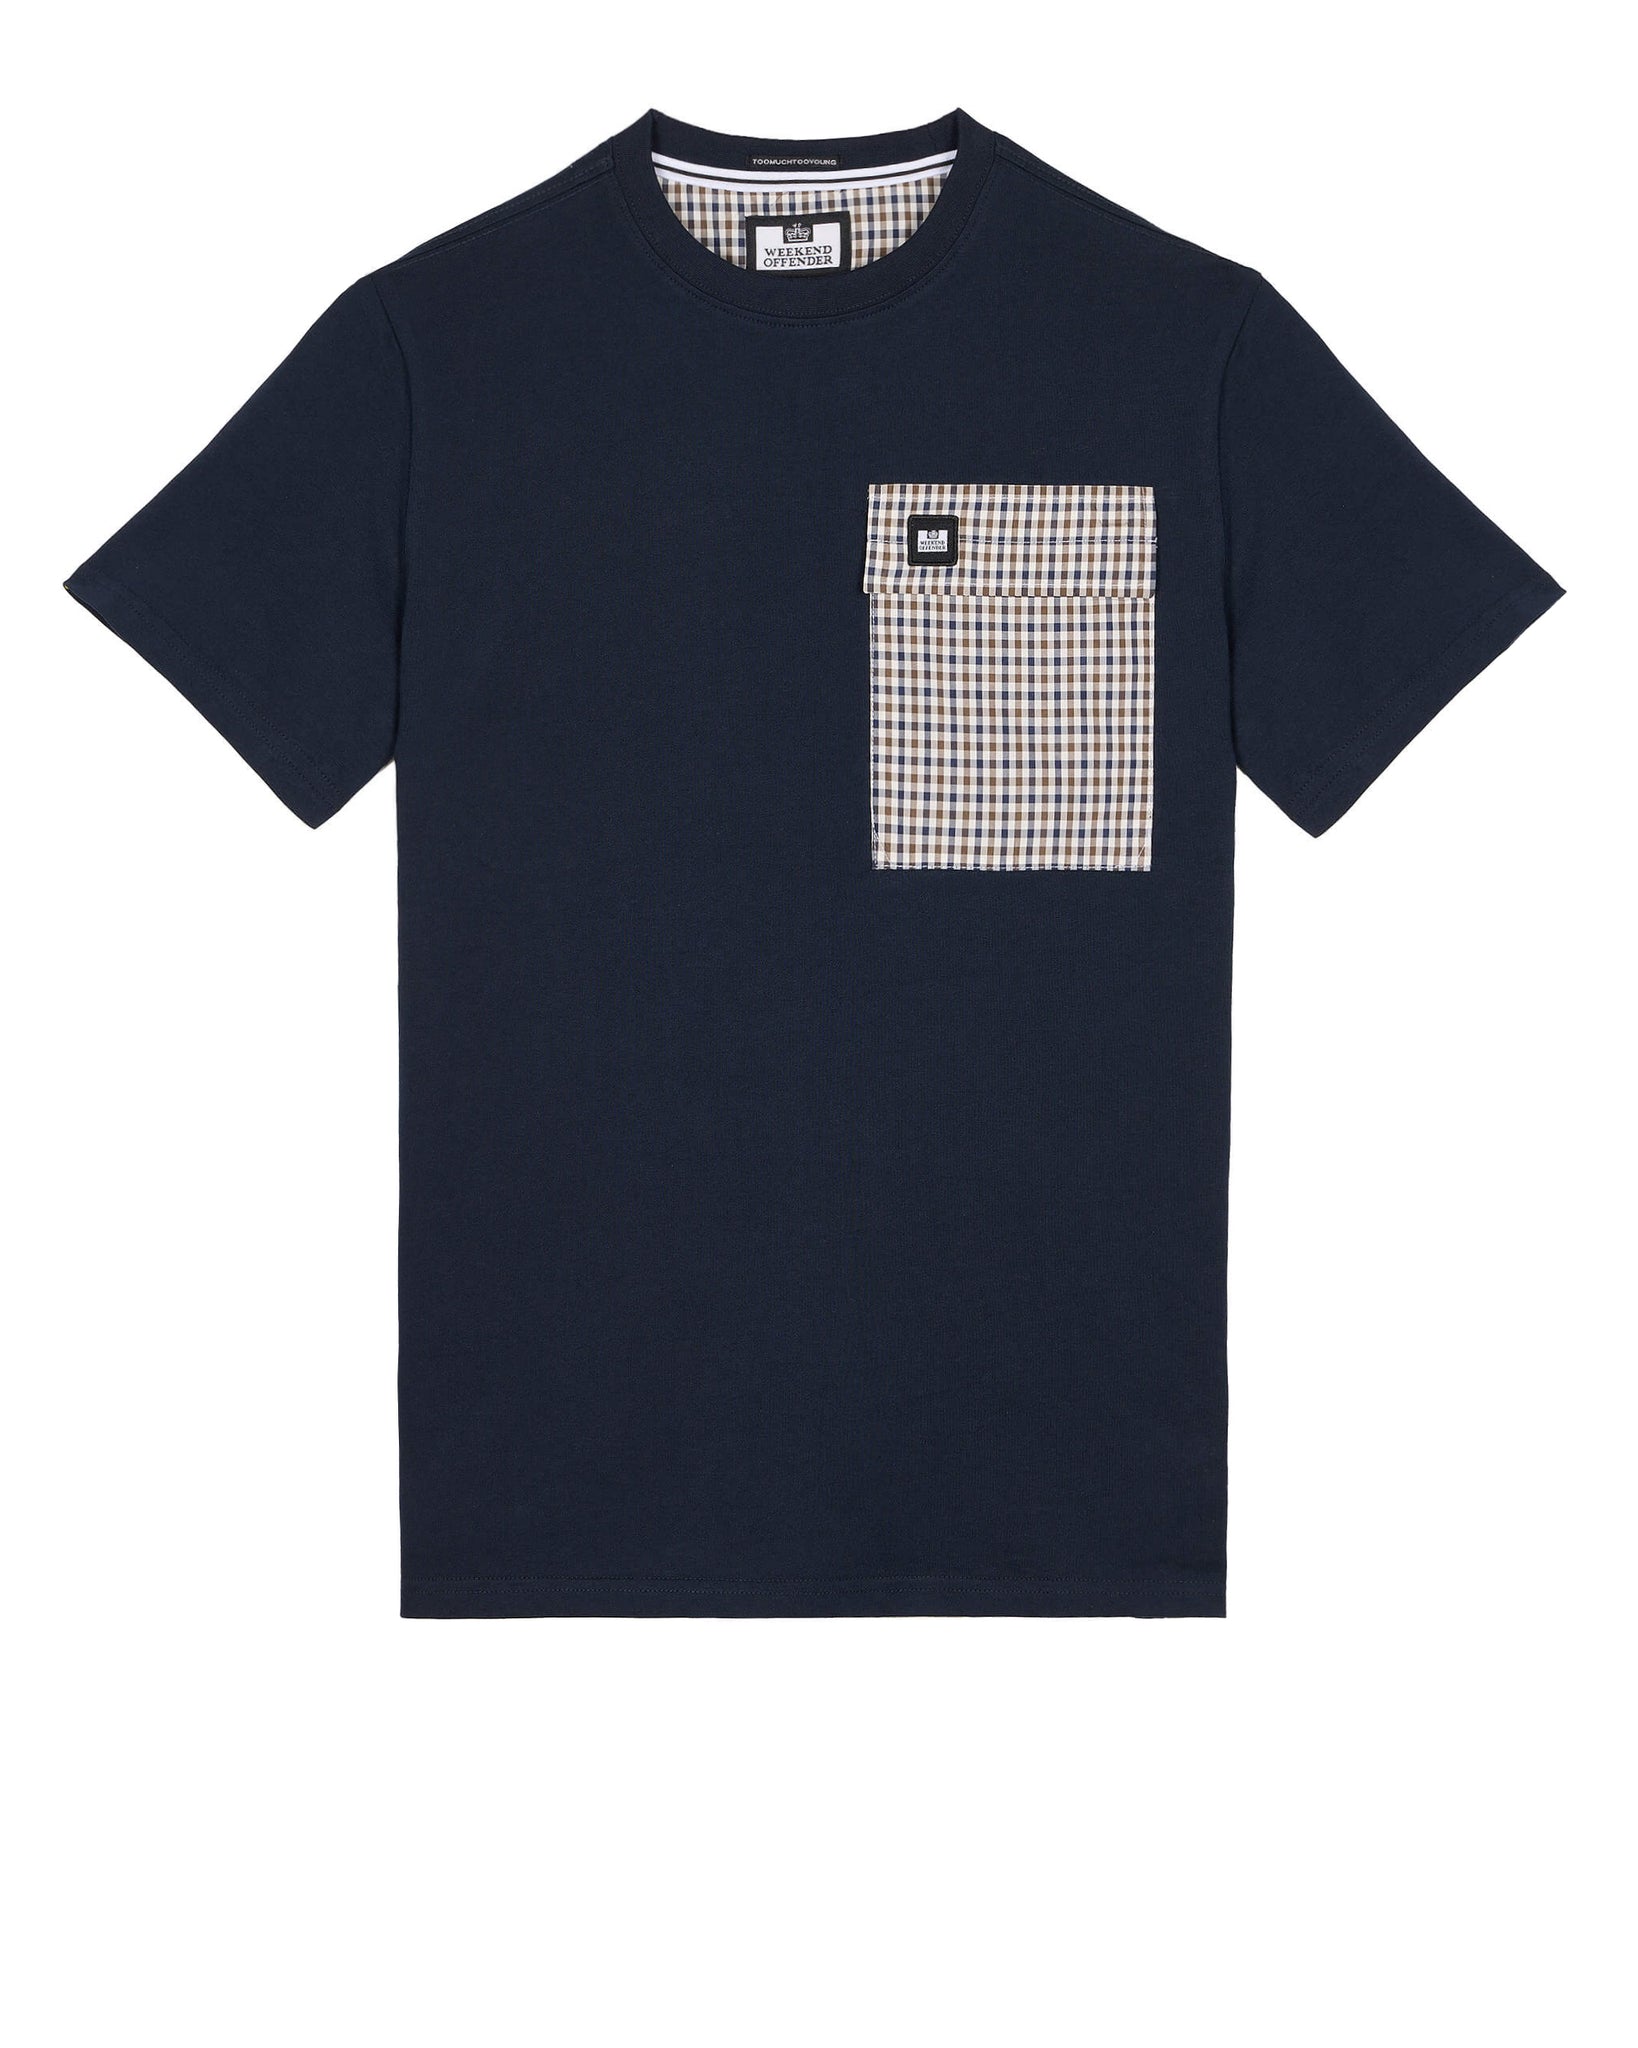 Gorman Pocket T-Shirt Navy